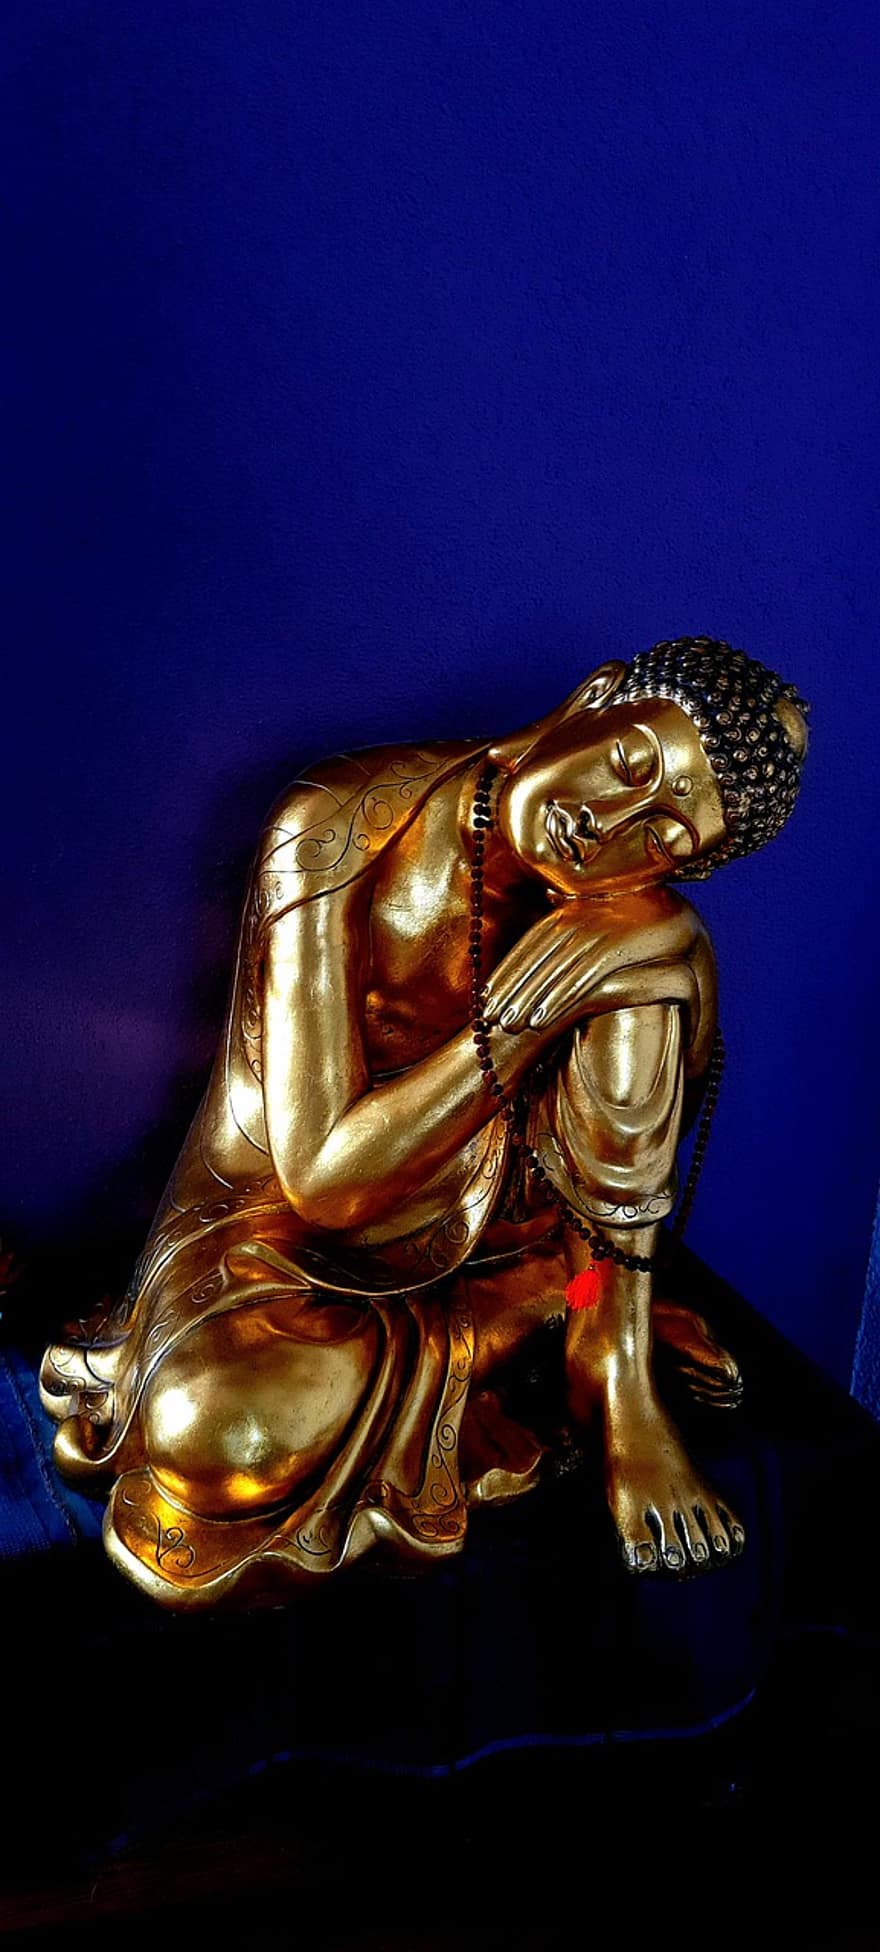 Buddha, Statue, Yoga, Meditation, Gold, Zen, Relax, Relaxation, religion, buddhism, spirituality